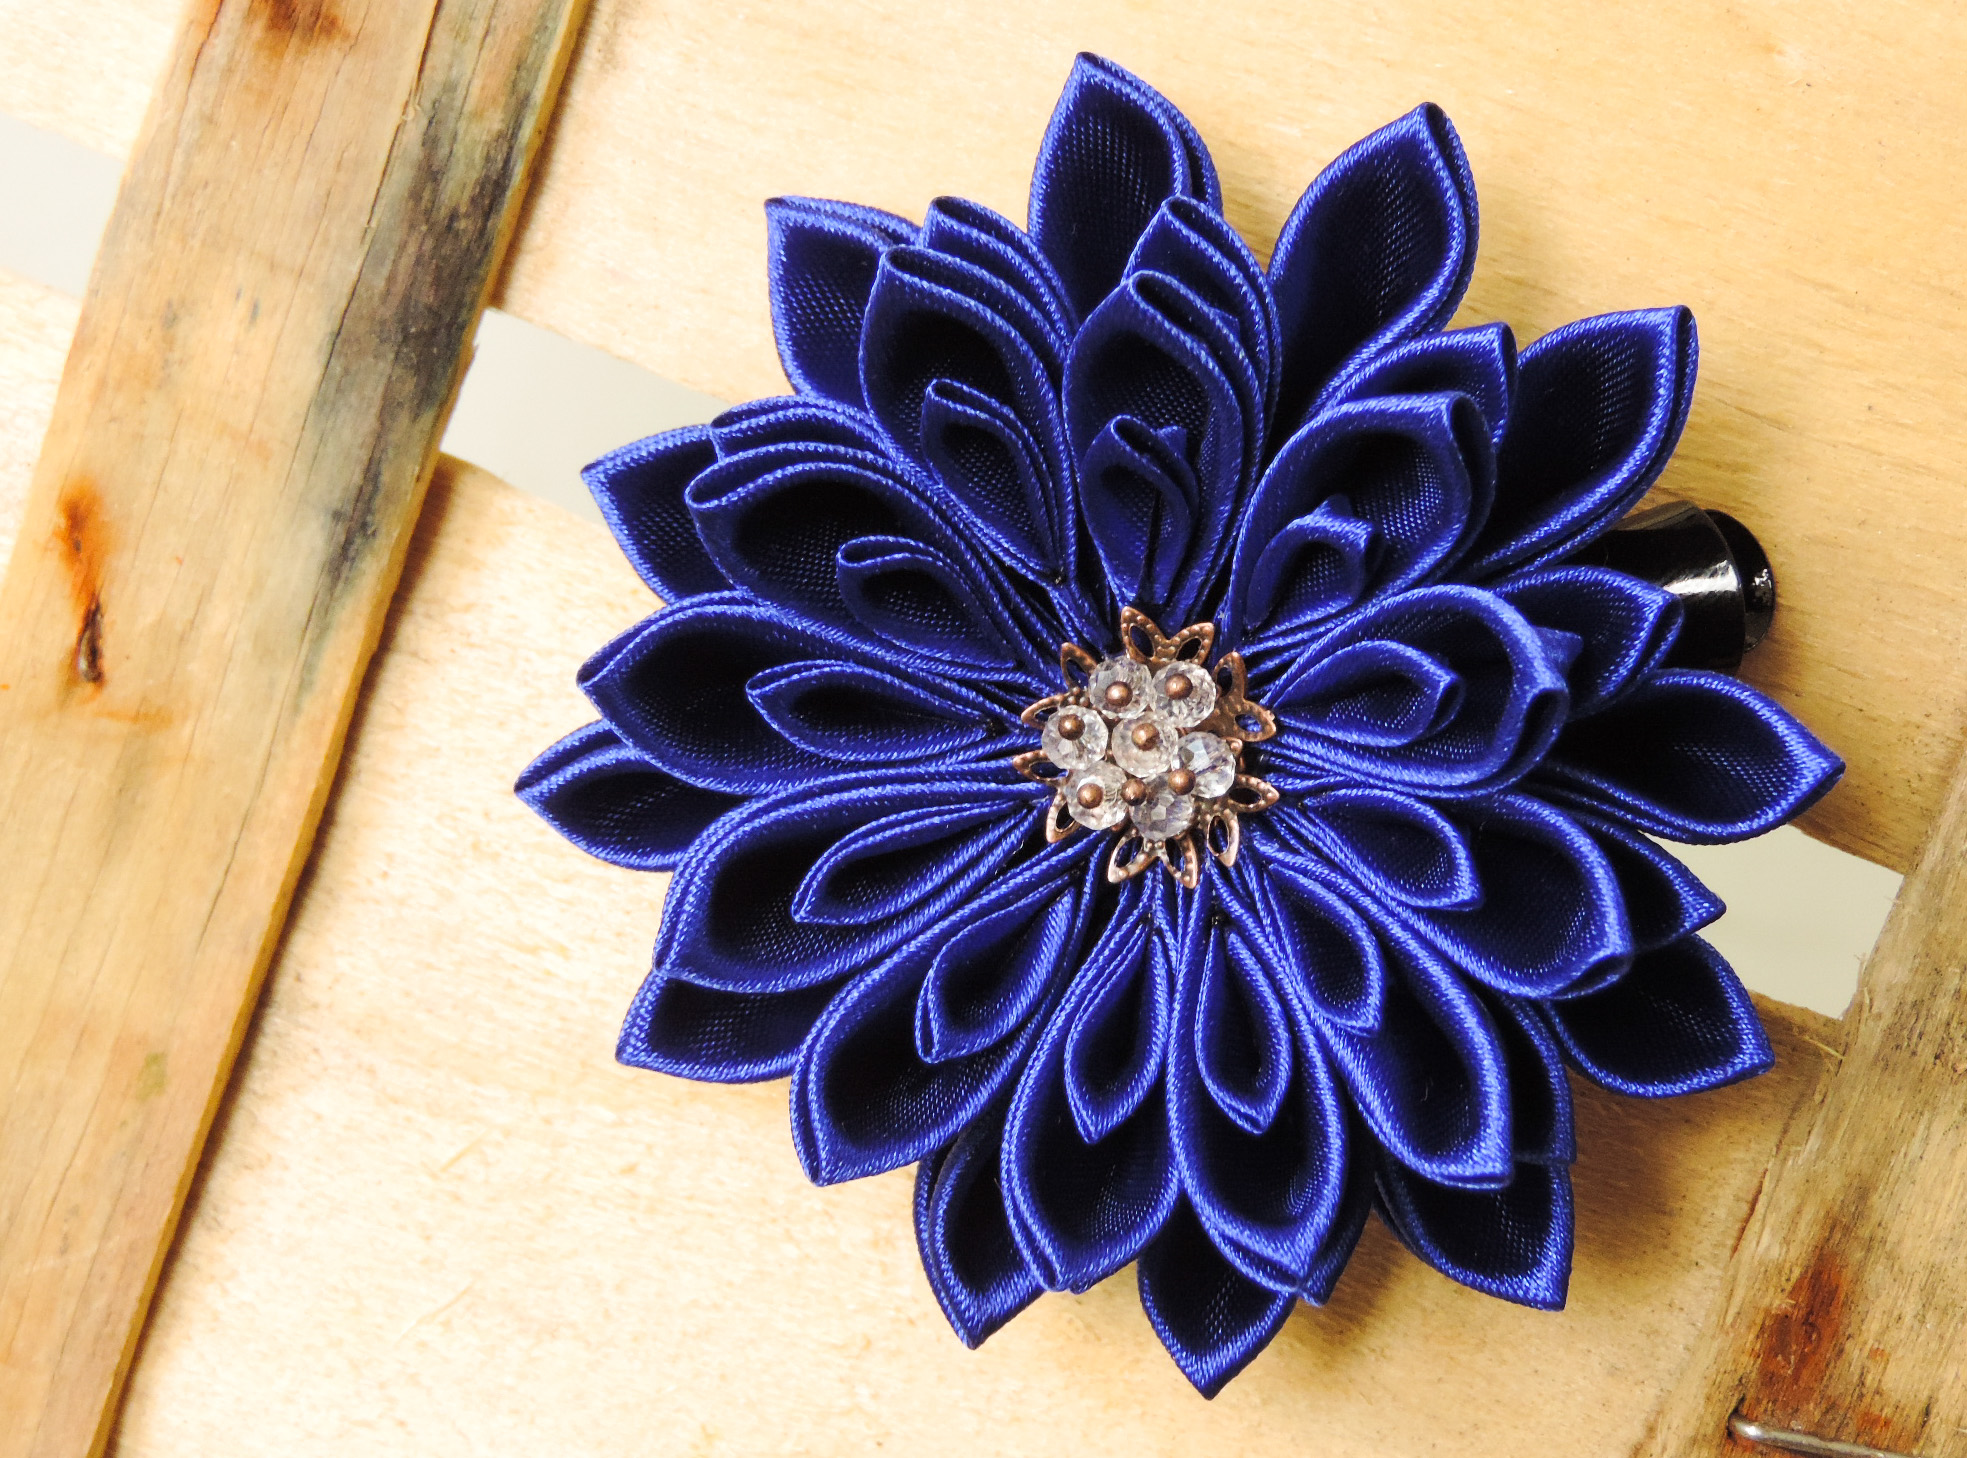 Royal blue satin chrysanthemum - DIY tutorial